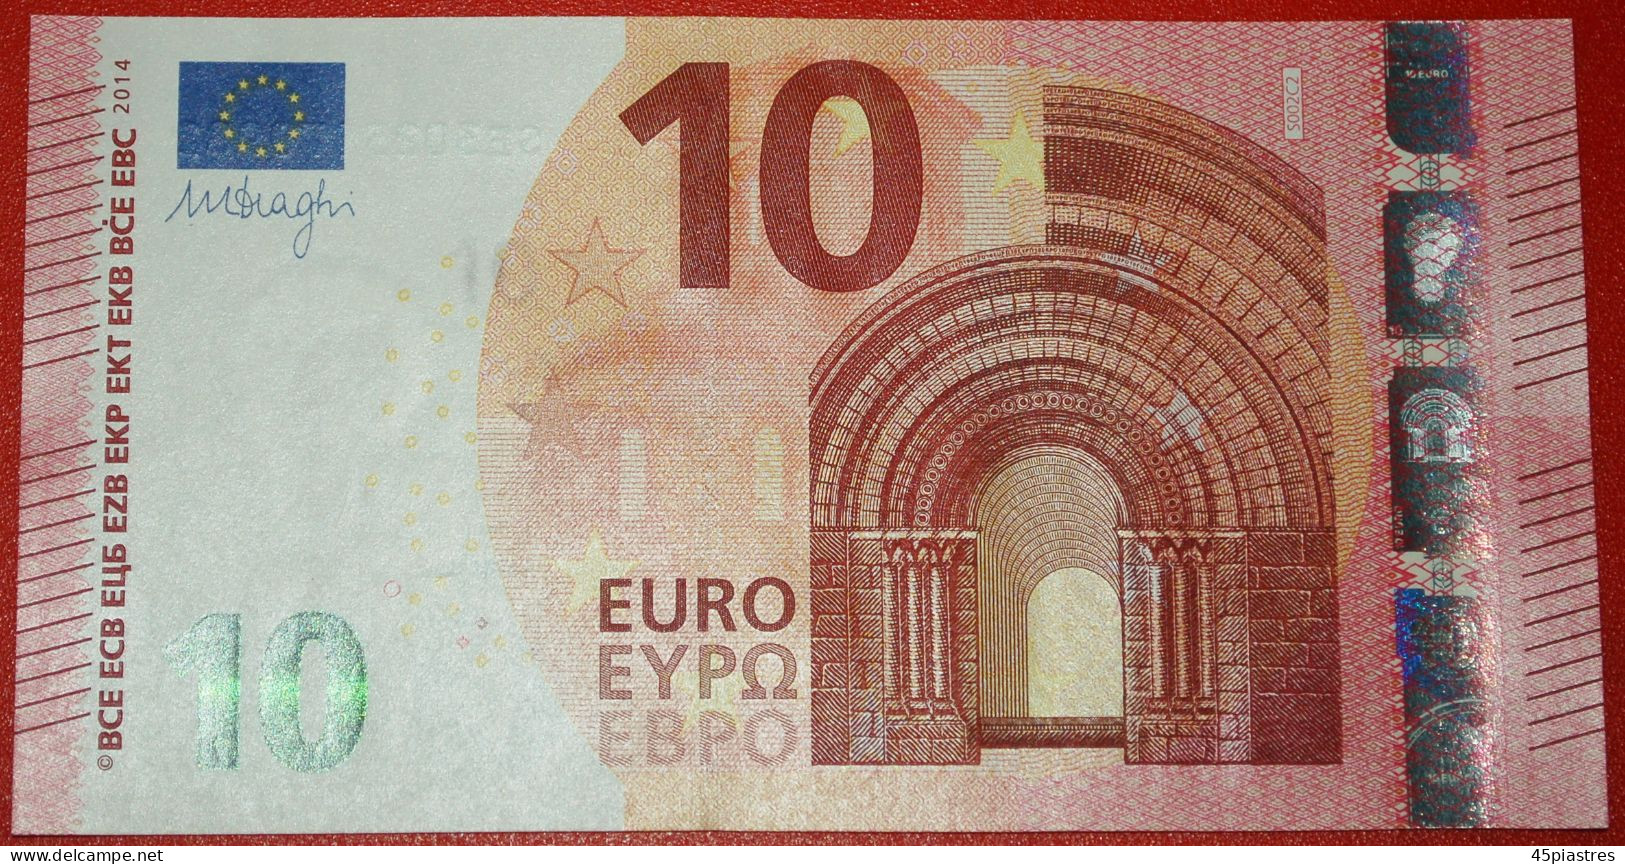 * NEW EUROPE TYPE For Russia (ex. The USSR): ITALY  10 EURO 2014 DRAGHI PREFIX SE S002C2! UNC CRISP!· NO RESERVE! - 10 Euro